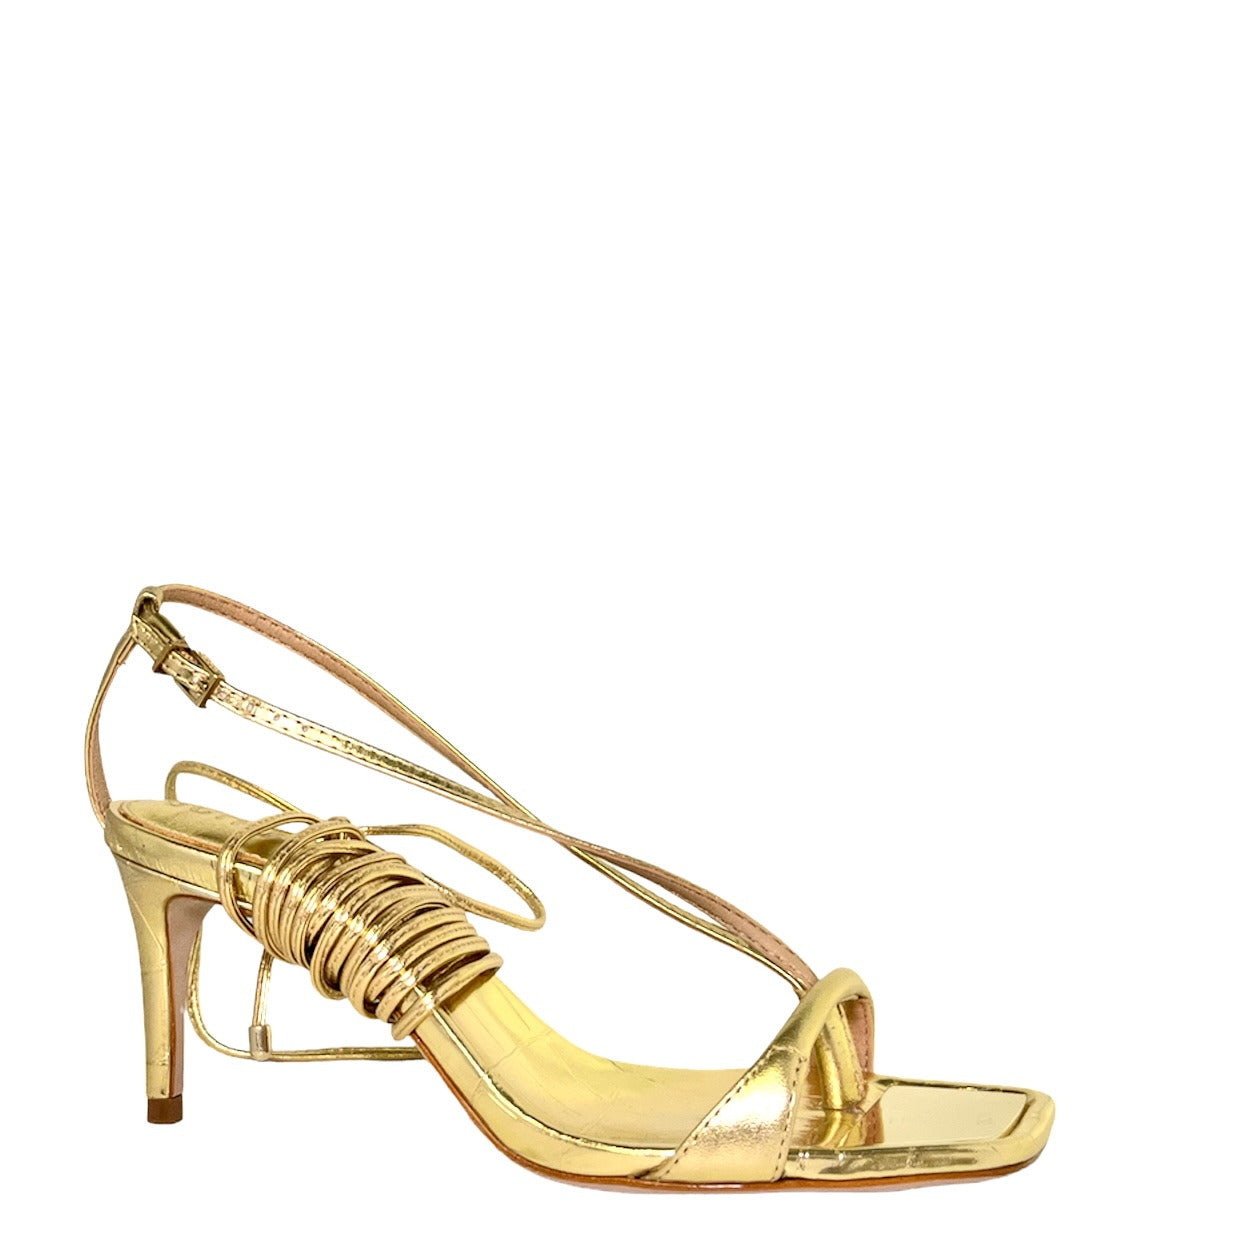 Gold thong sandal